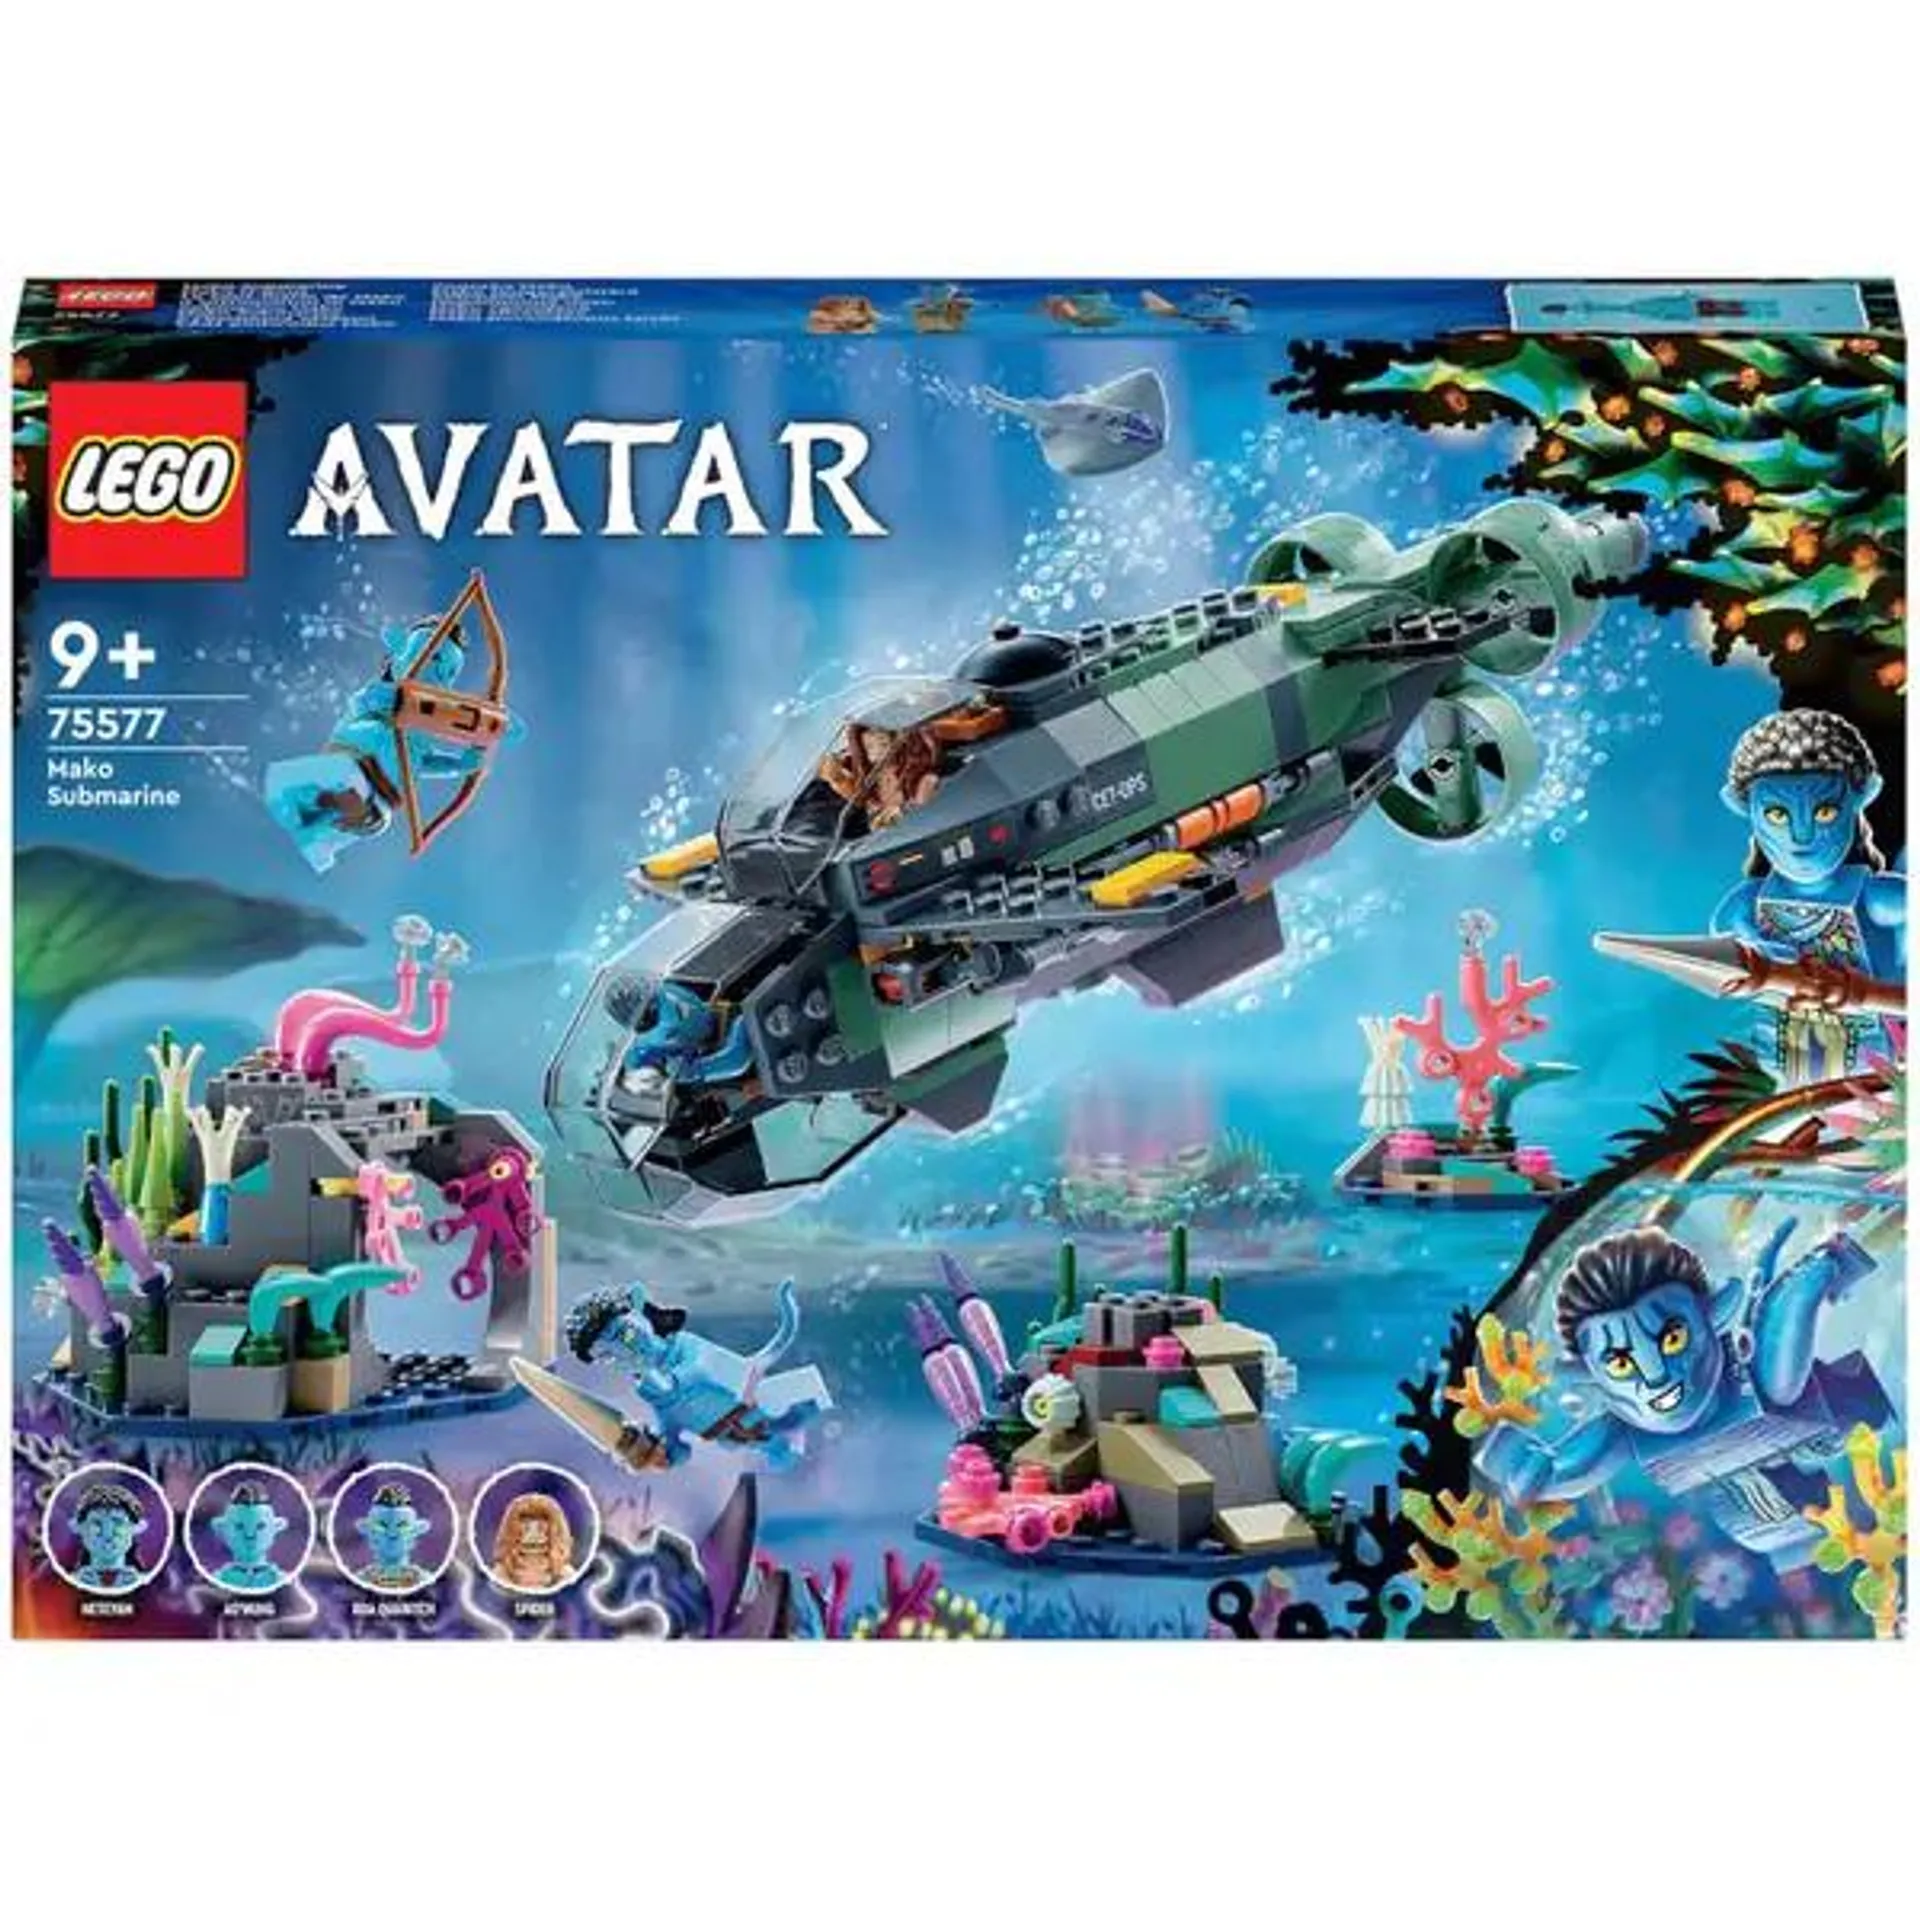 LEGO Avatar Mako Submarine Toy, The Way of Water Set (75577)